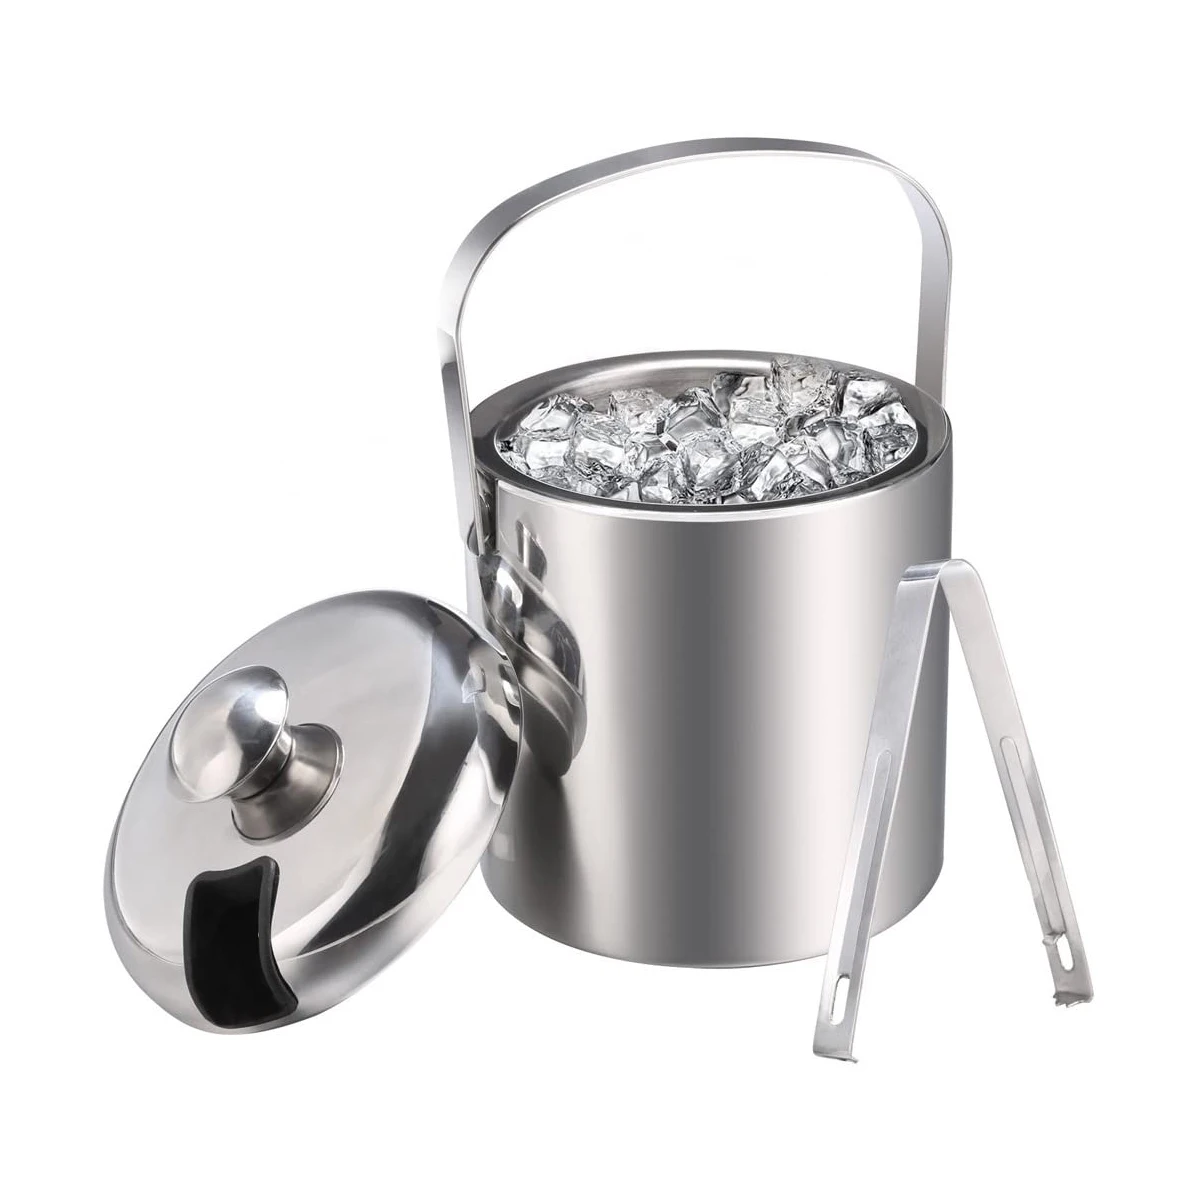 Айс бакет. Ведро для льда (айс-бакет). Айс бакет (барный инвентарь). Stainless Steel Ice Bucket with Tong Silver. Ведро для льда металл 16,4х12,5см MVQ biin145.